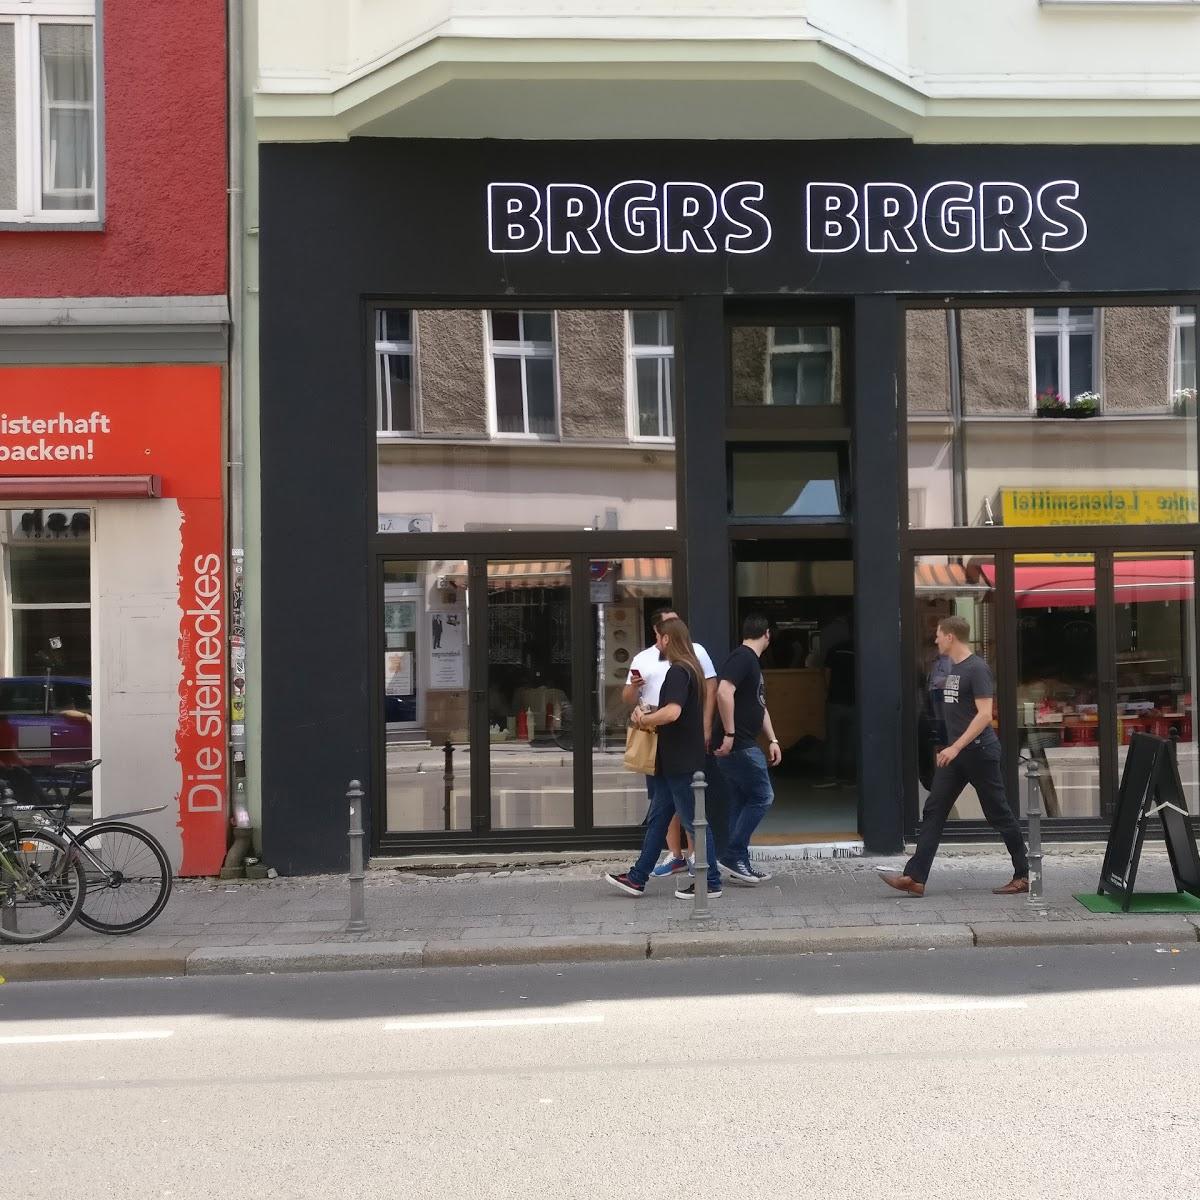 Restaurant "BRGRS BRGRS - Organic Burgers" in Berlin